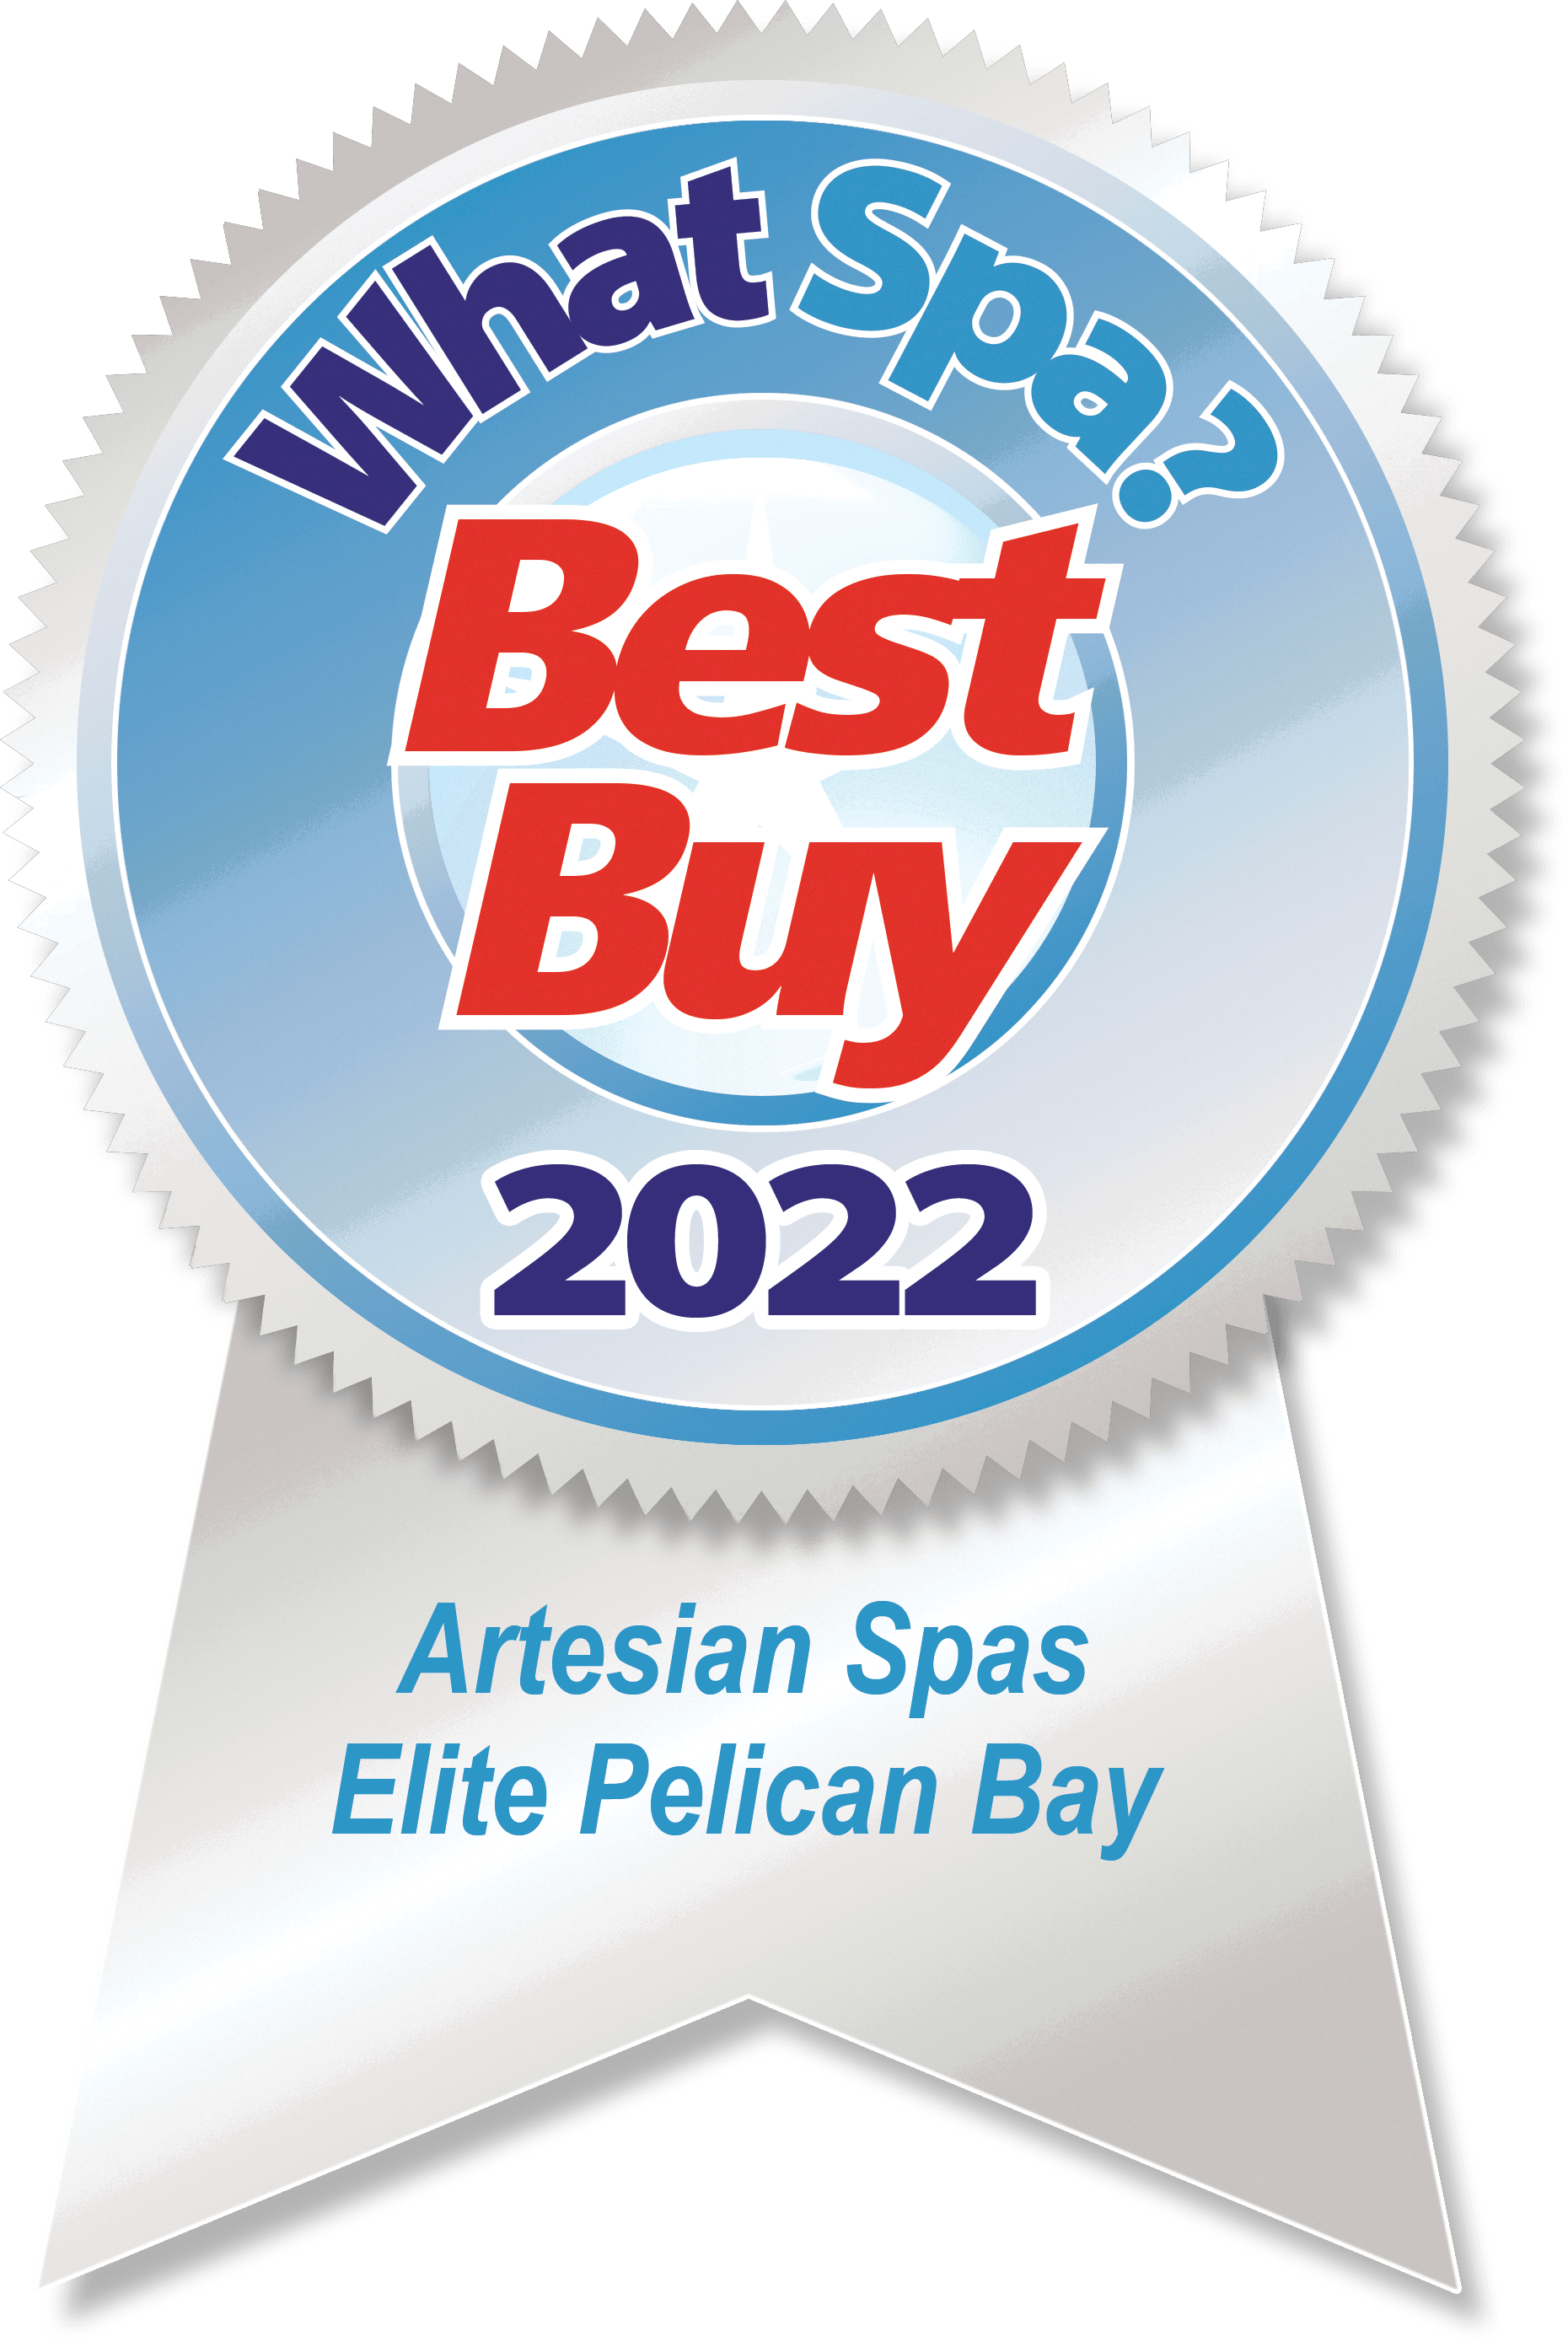 Artesian Spas Pelican Bay what Spas 2022